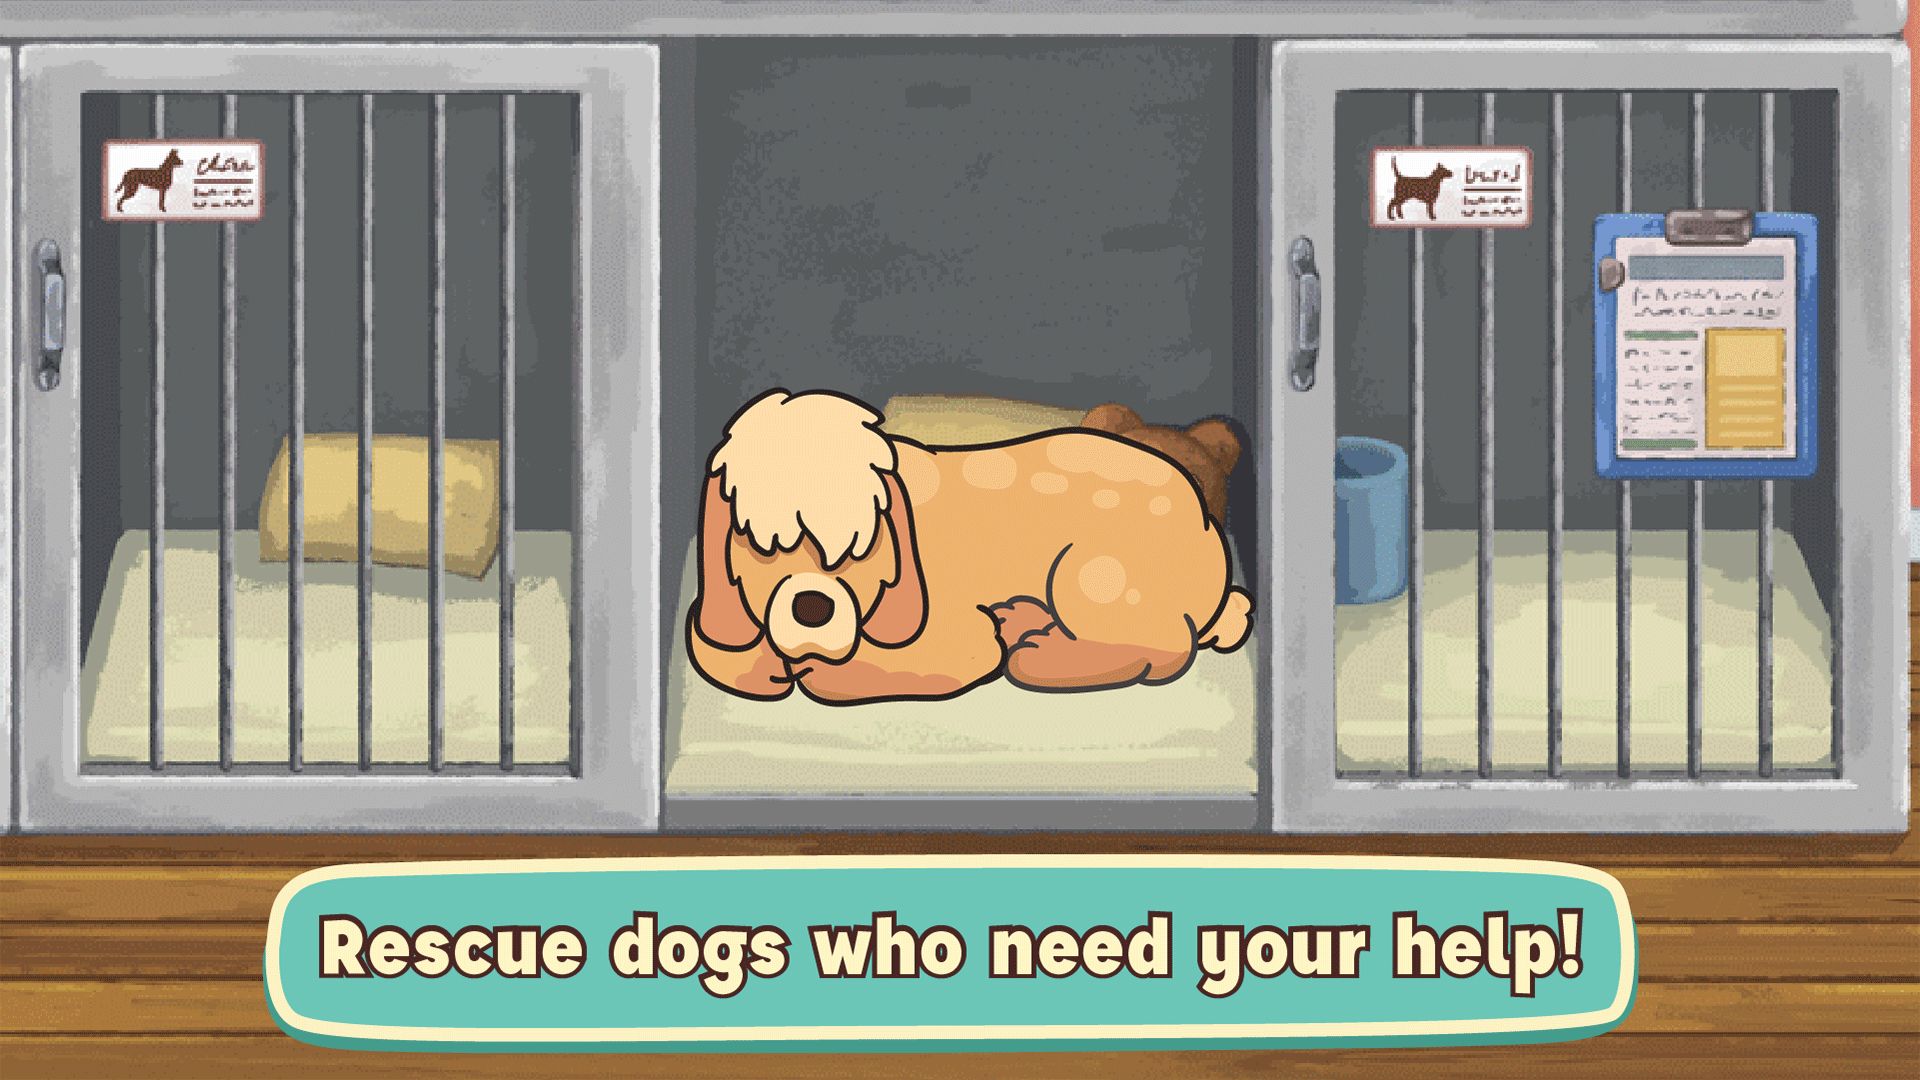 Screenshot of Old Friends Dog Game